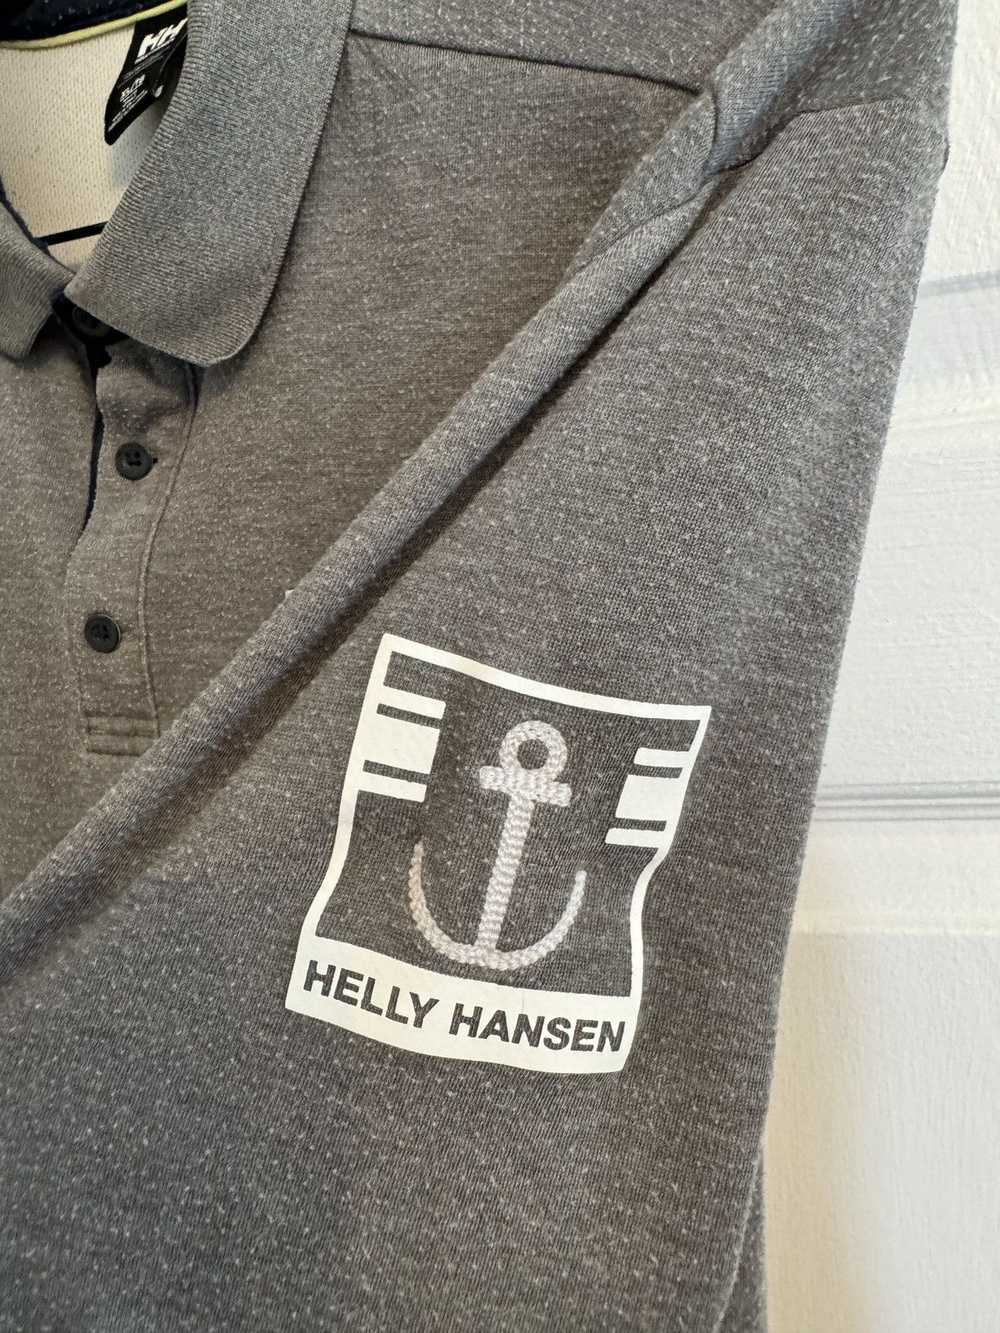 Helly Hansen Tiara Yachts Helly Hansen Polo (XL) - image 4